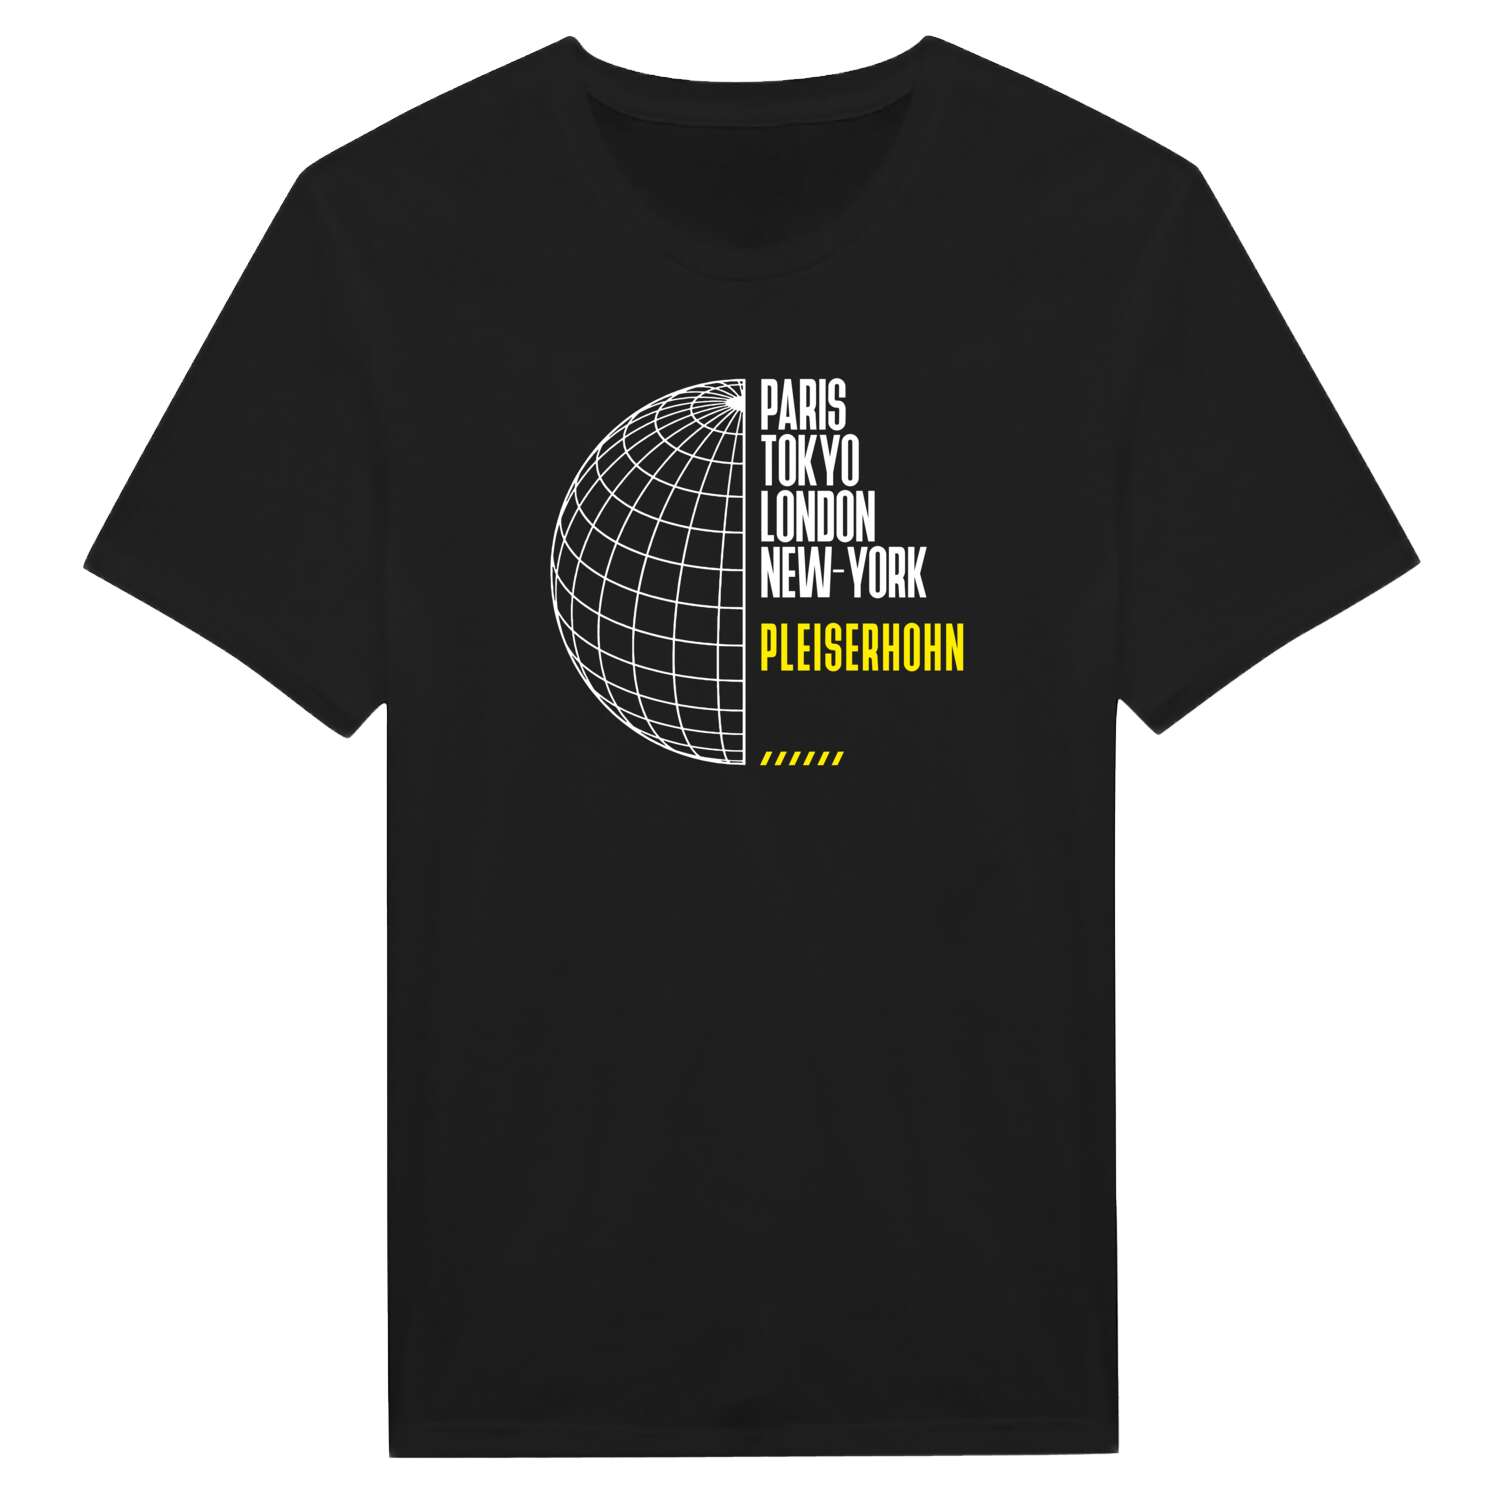 Pleiserhohn T-Shirt »Paris Tokyo London«